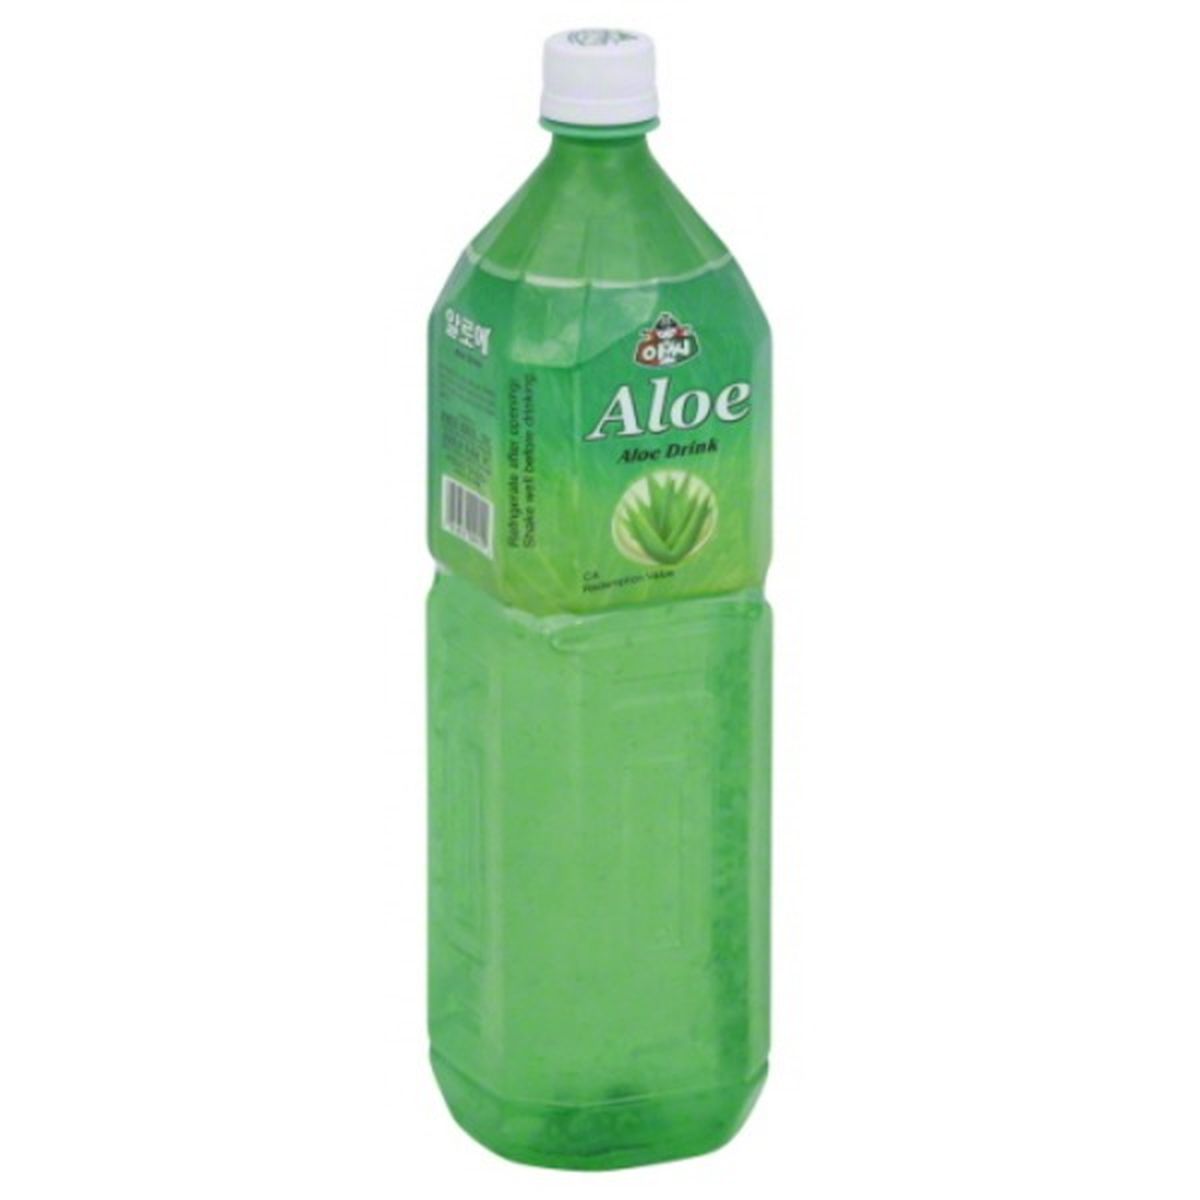 Calories in Aloe Drink, Aloe